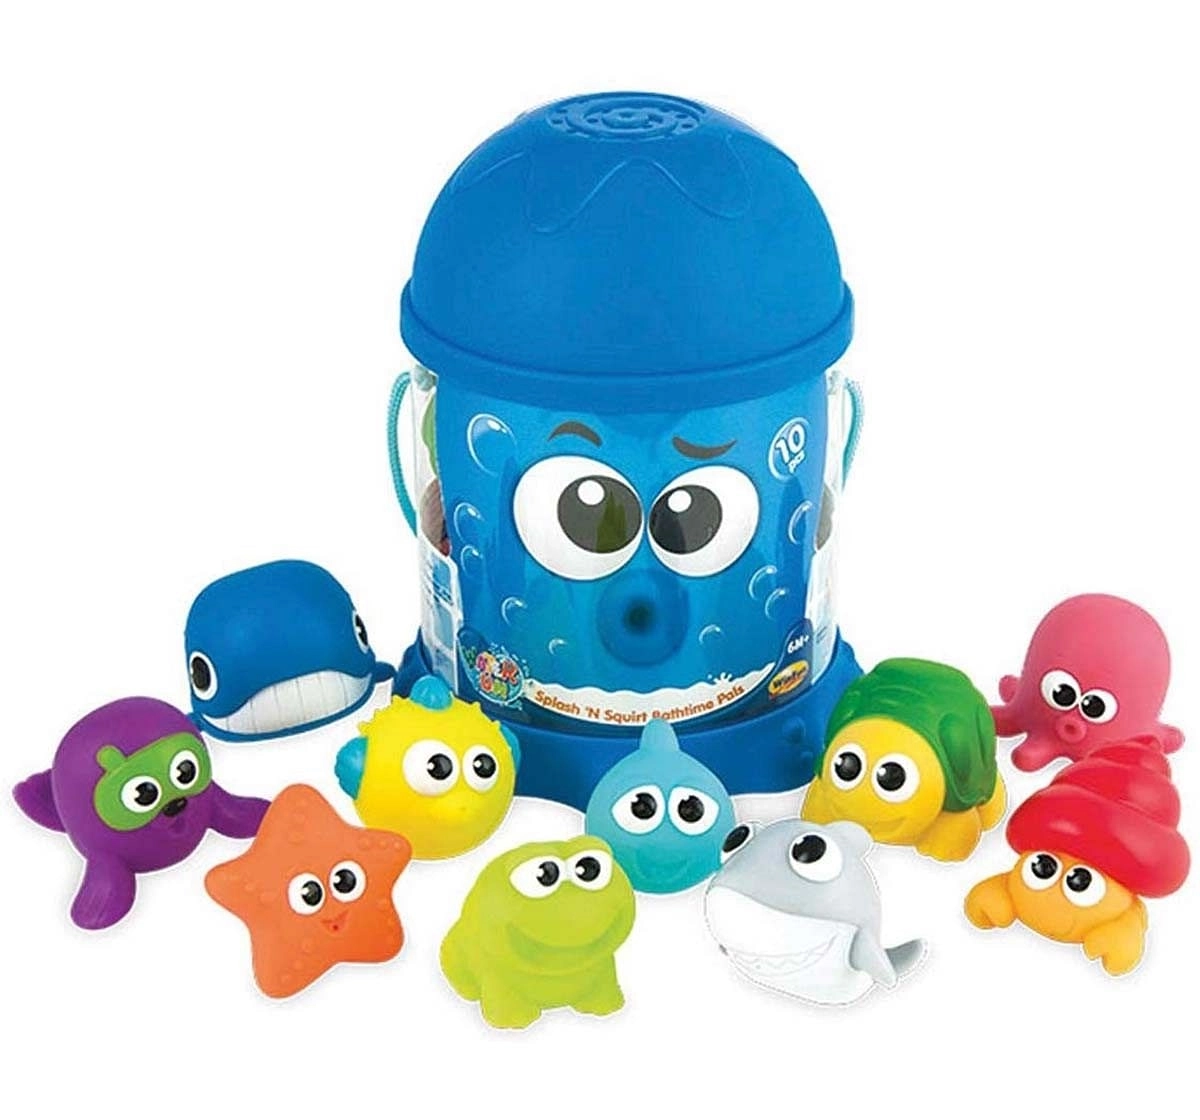 Winfun Splash N Squirt Bath Pals - 10Pcs Bath Toys & Accessories for Kids age 12M+ 